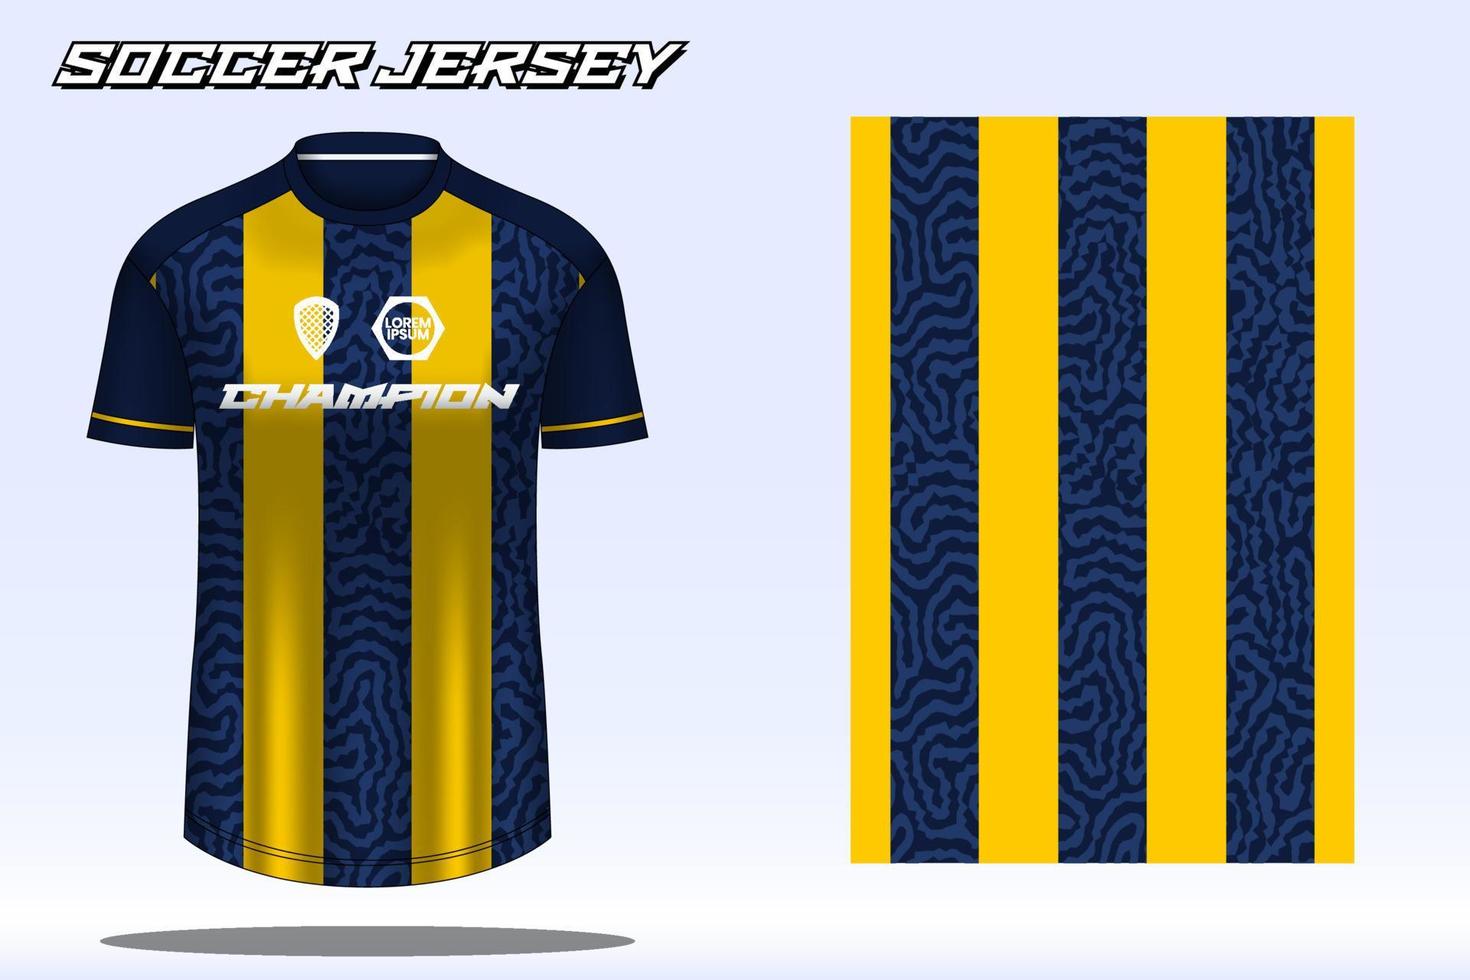 Soccer jersey sport t-shirt design mockup for football club 16 vector